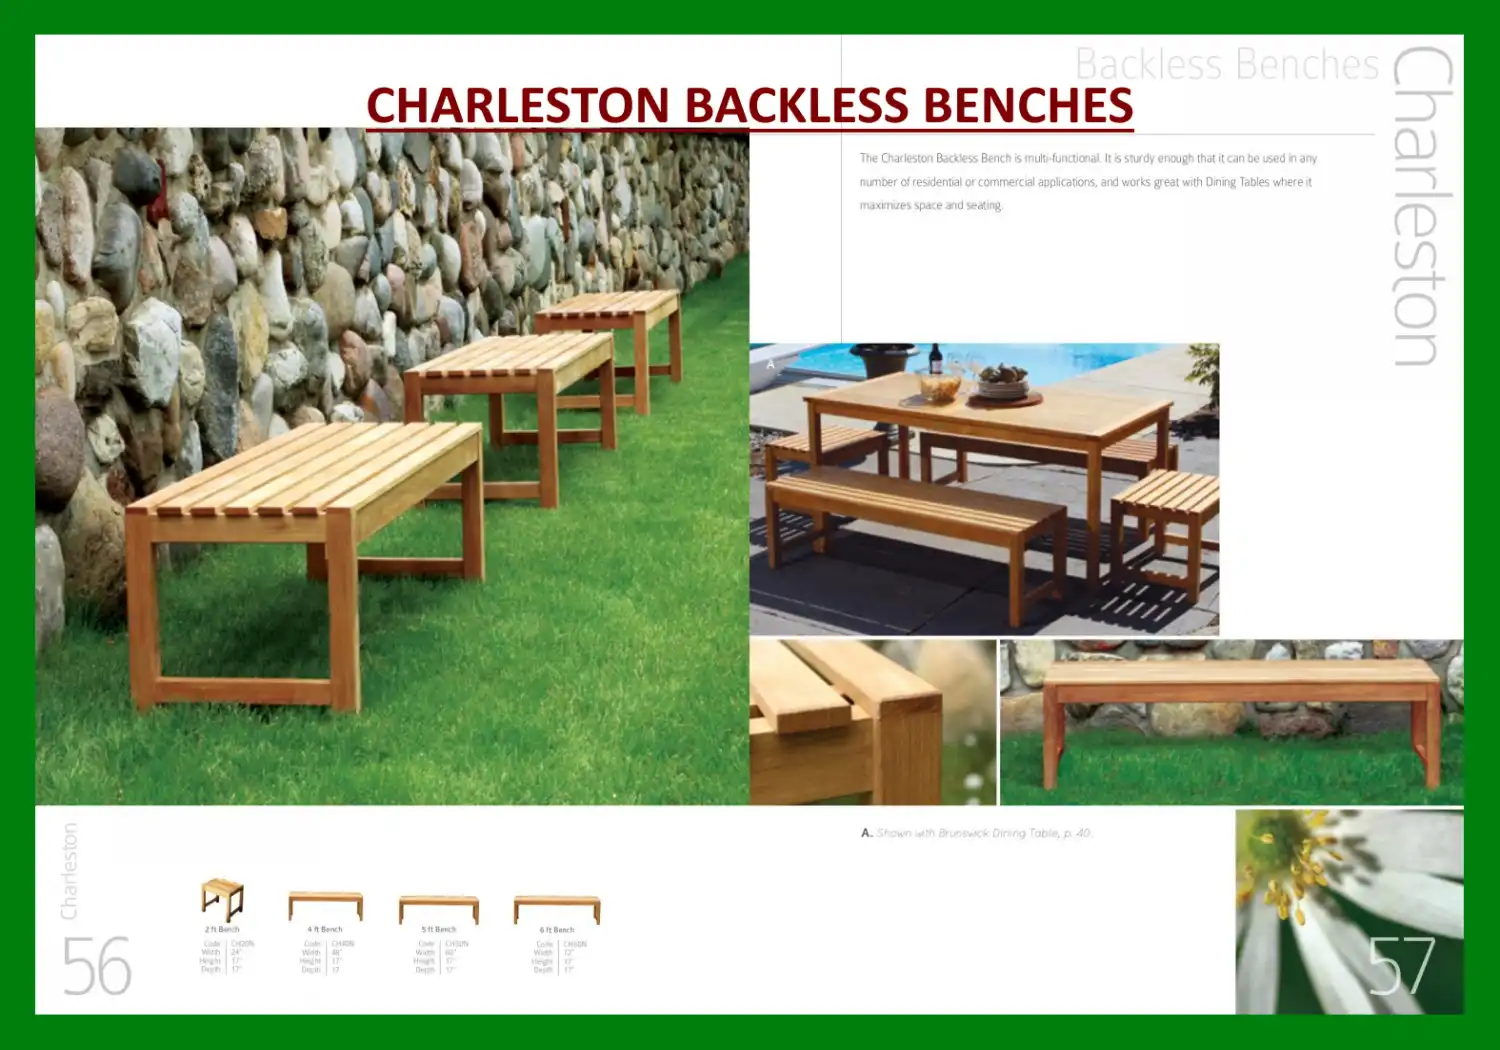 CHARLESTON BACKLESS BENCHES